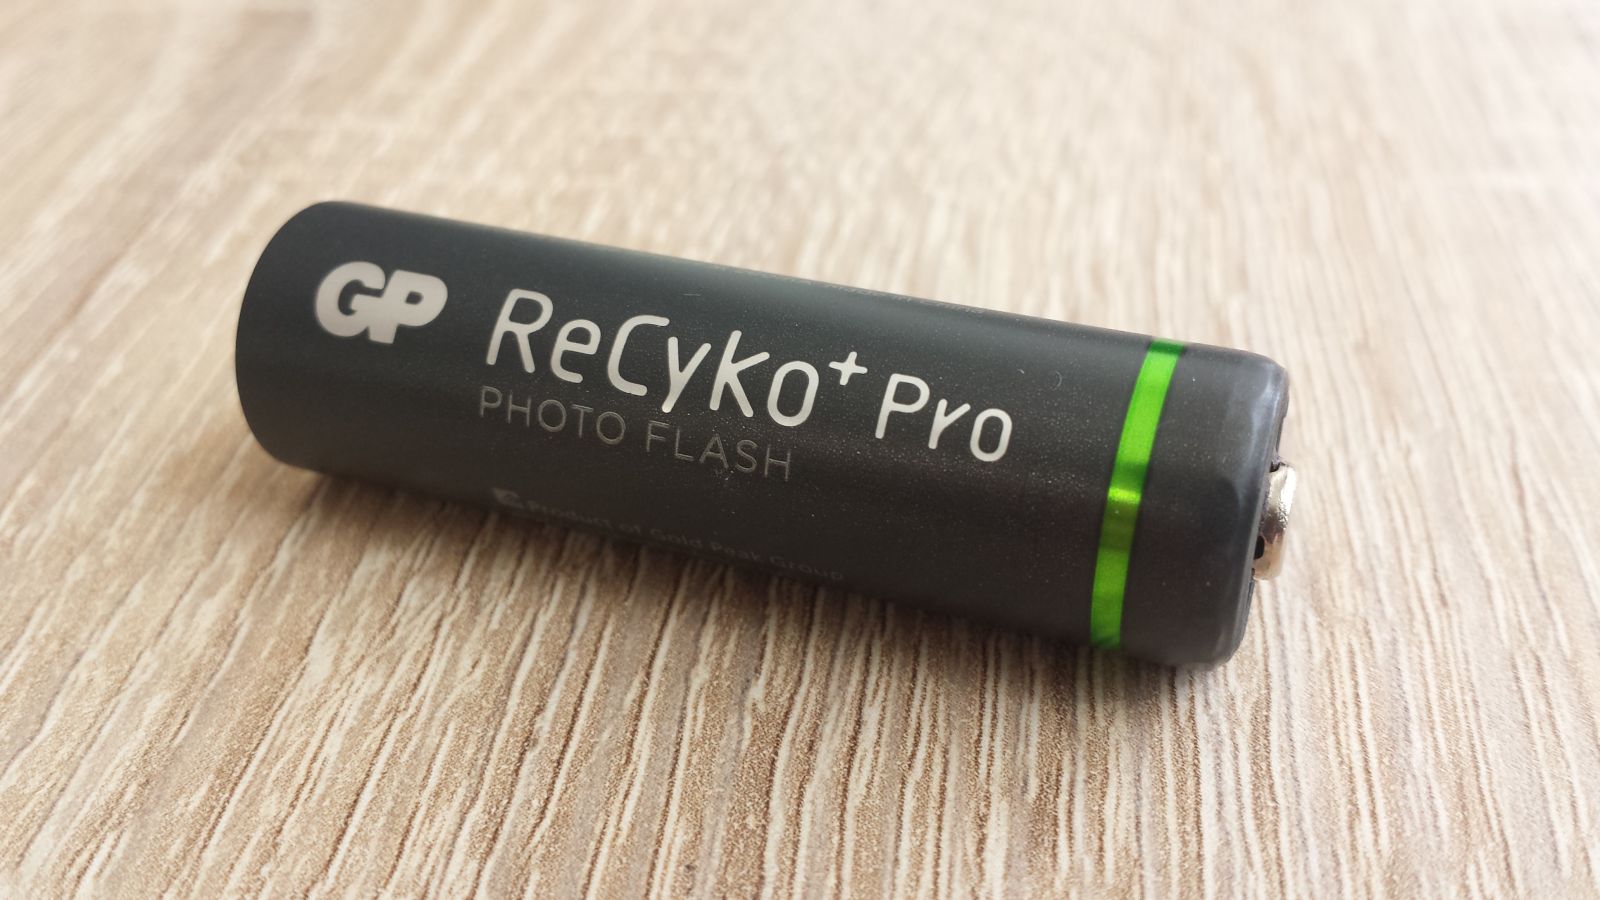 GP ReCyko+ Pro Photo Flash